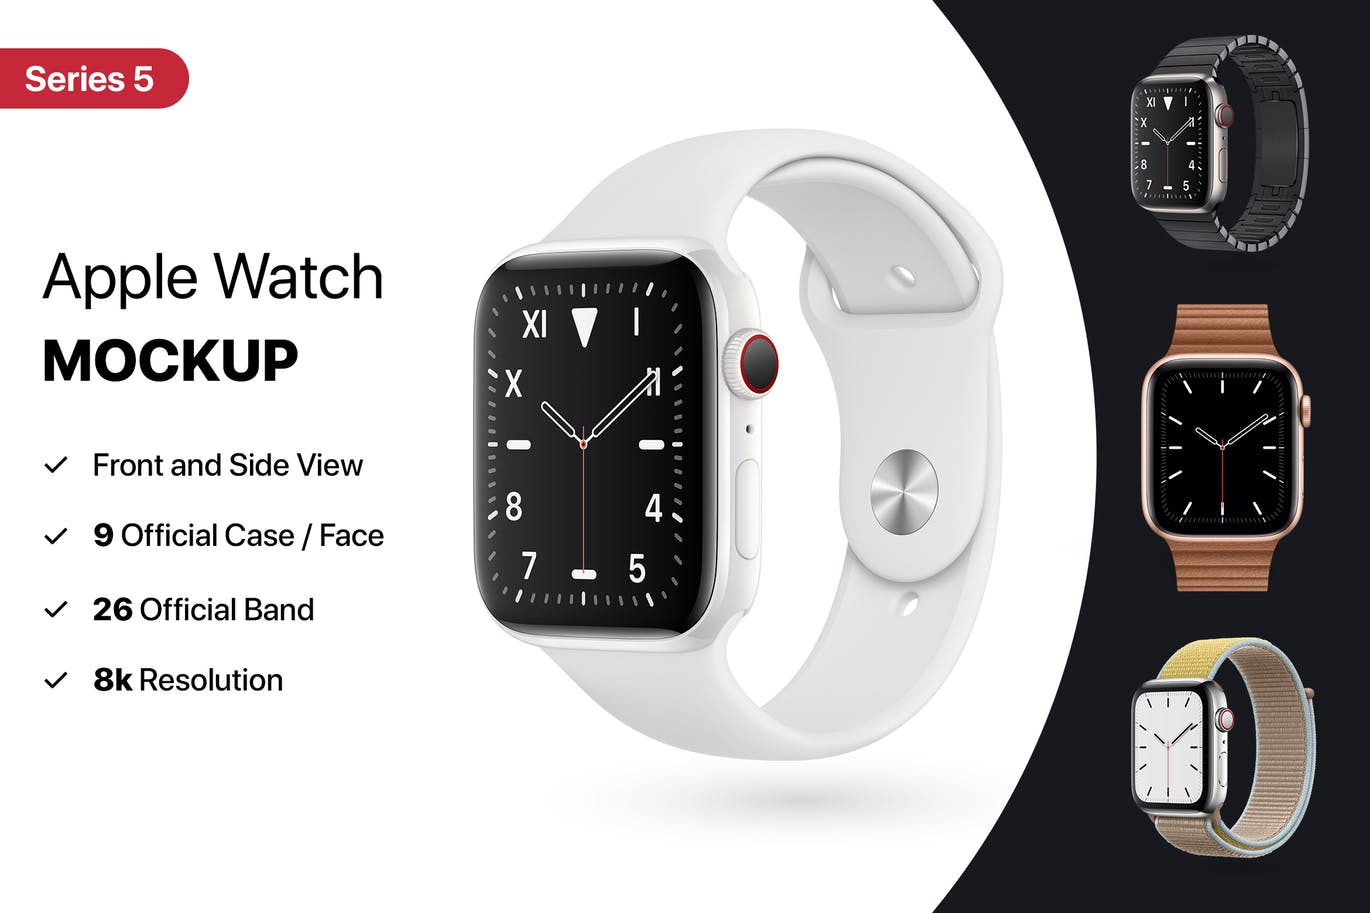 2019年第五代Apple Watch智能手表样机模板 Apple Watch Mockup Series 5插图